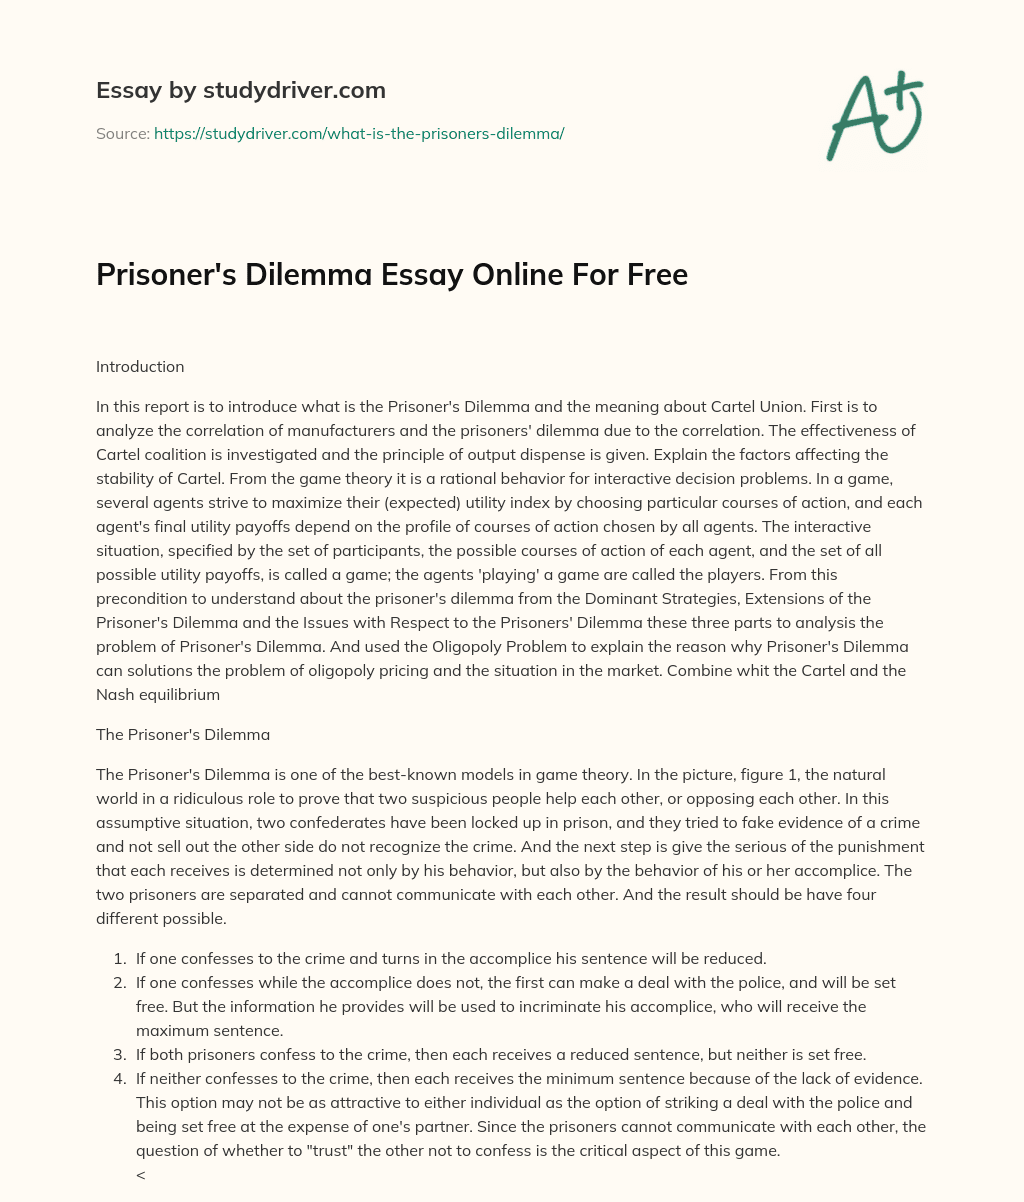 Prisoner’s Dilemma Essay Online for Free essay